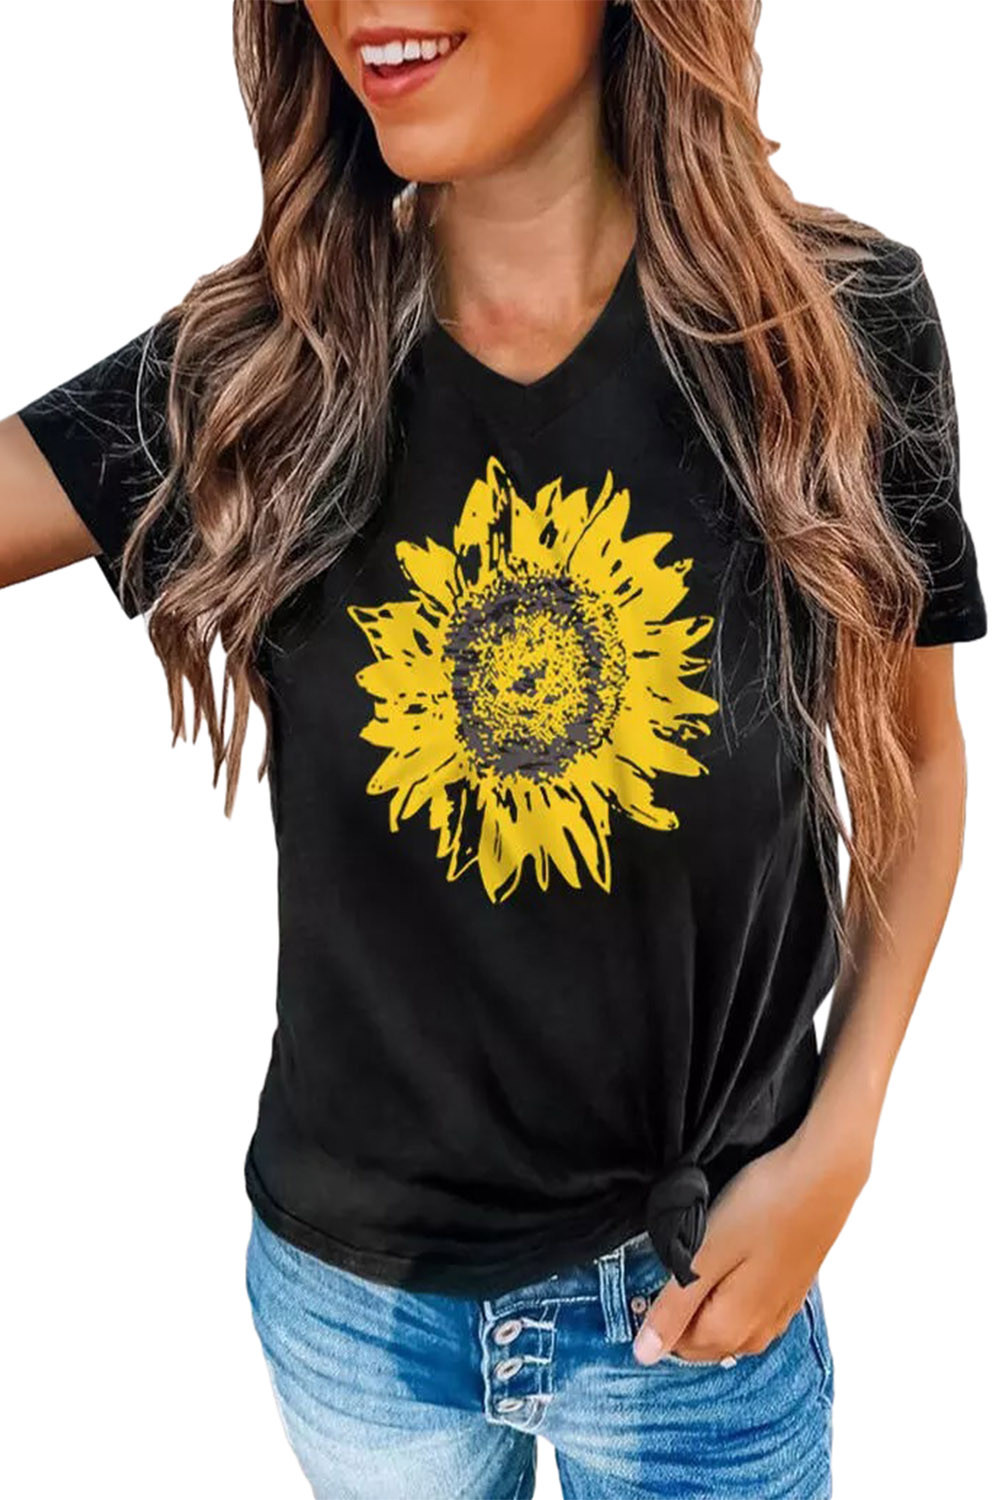 US$5.5 Sunflower V-Neck Casual T-Shirt Tee - Black Wholesale Online